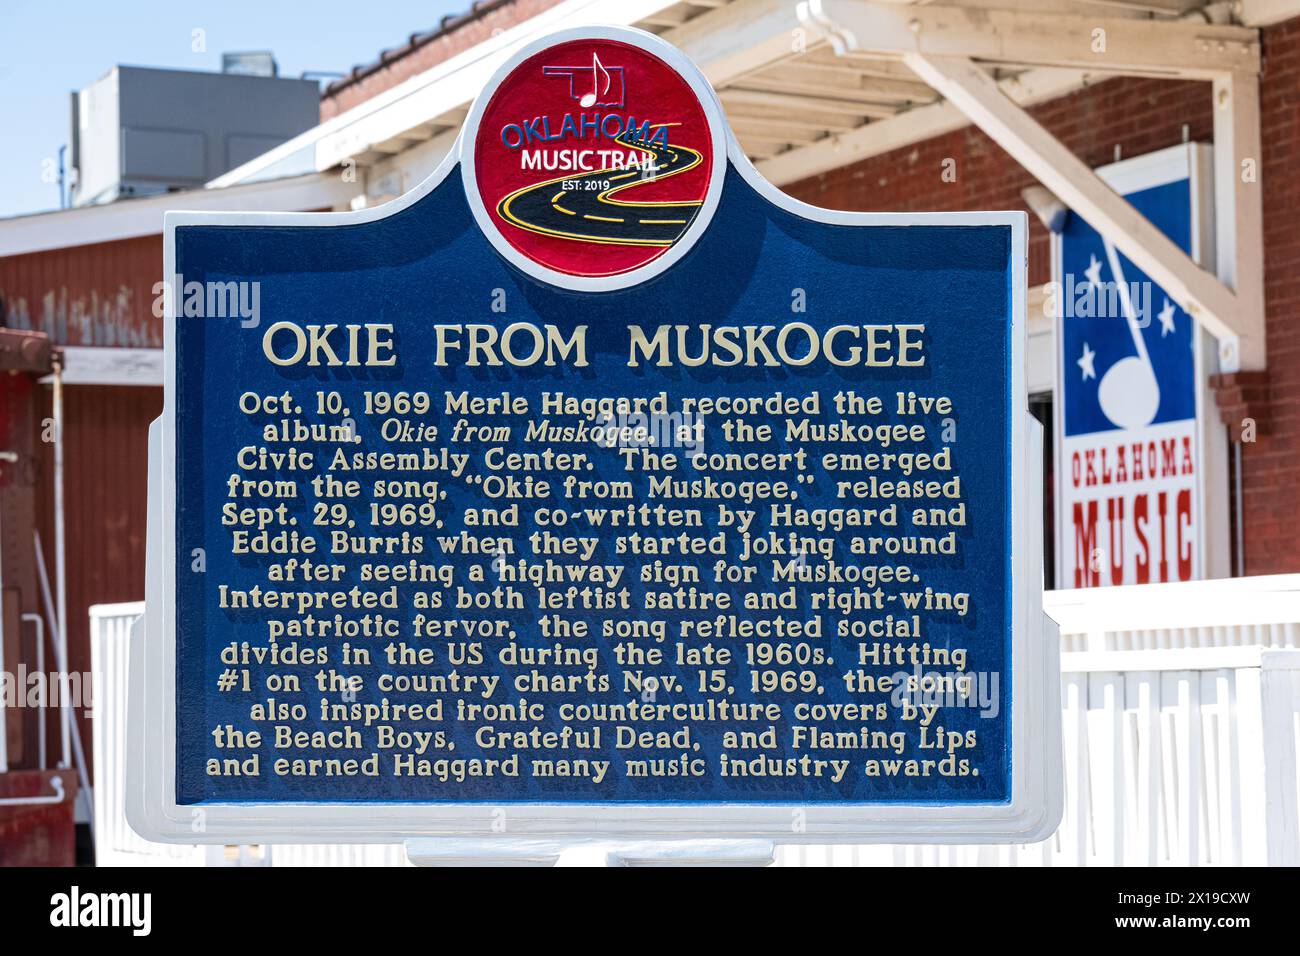 Okie From Muskogee de Merle Haggard, marqueur historique de l'Okie Music Trail au Oklahoma Music Hall of Fame de Muskogee. (ÉTATS-UNIS) Banque D'Images